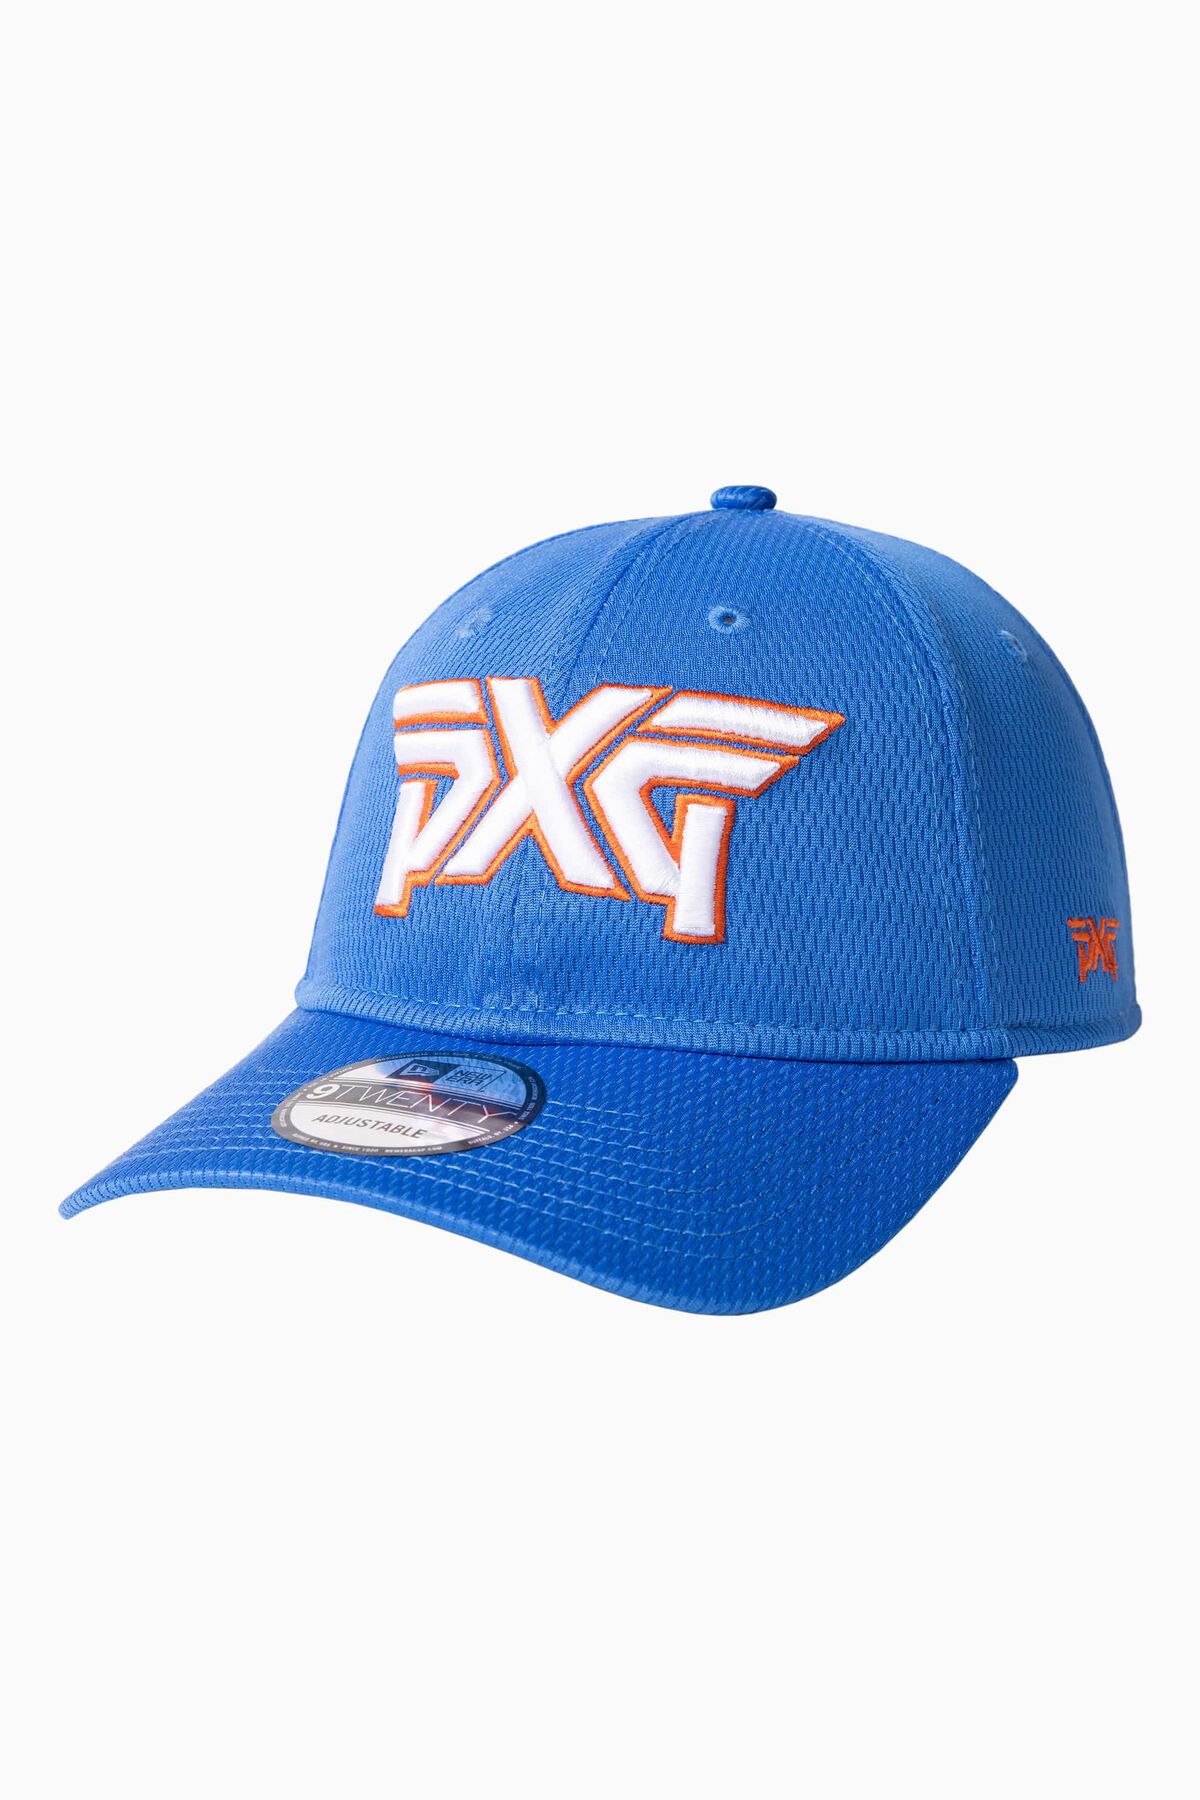 PXG Oklahoma Blue/Orange/White 9TWENTY Adjustable Cap 